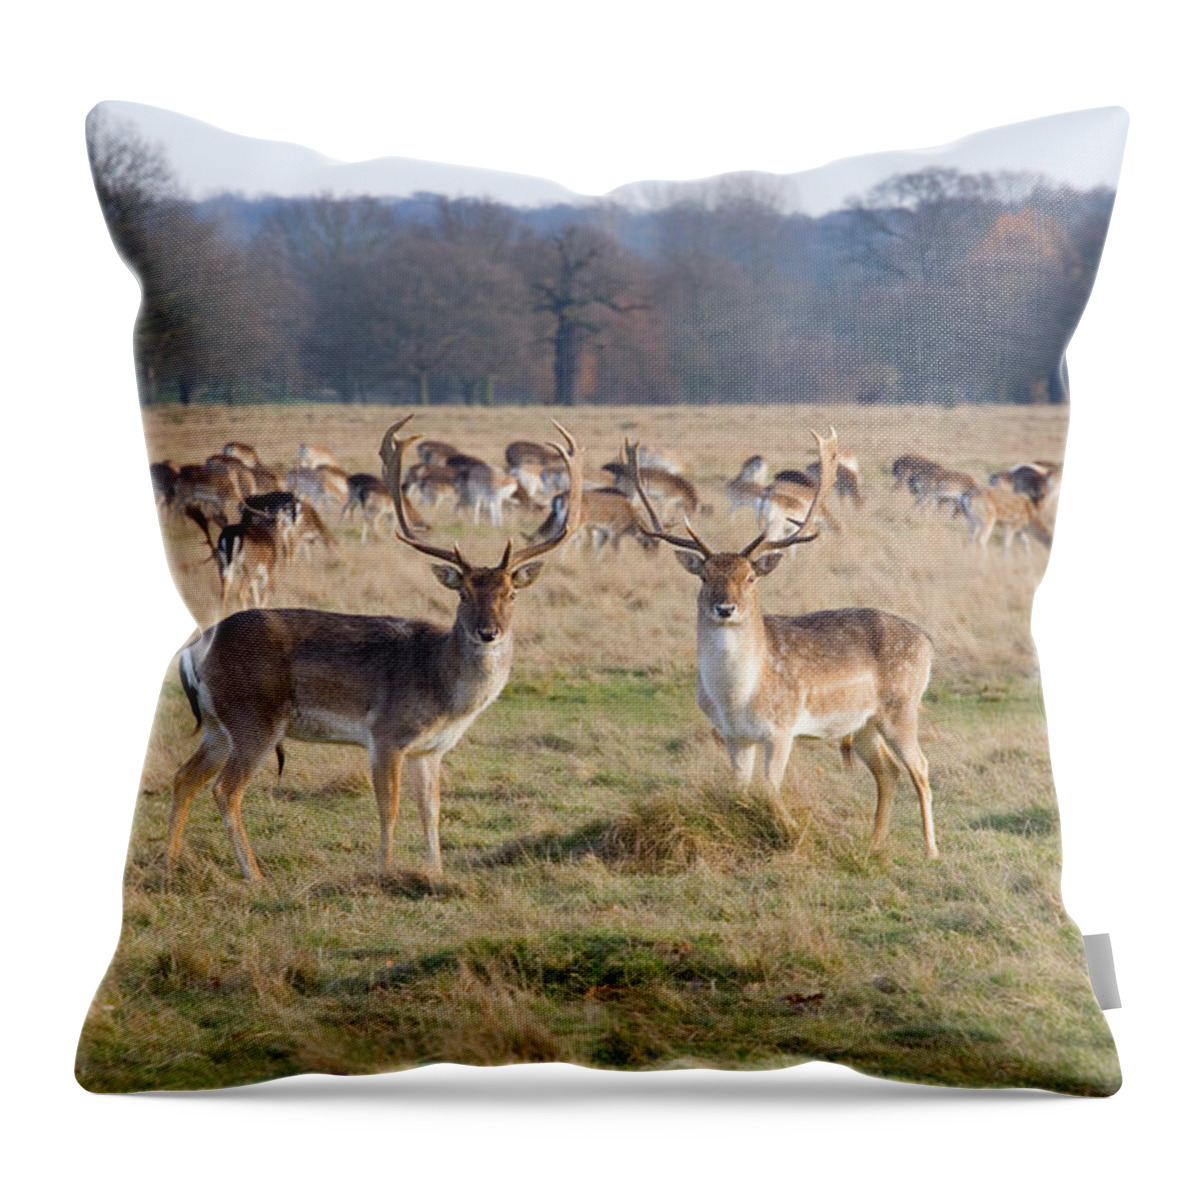 Grass Throw Pillow featuring the photograph Fallow Deer, Richmond, London, England by David C Tomlinson